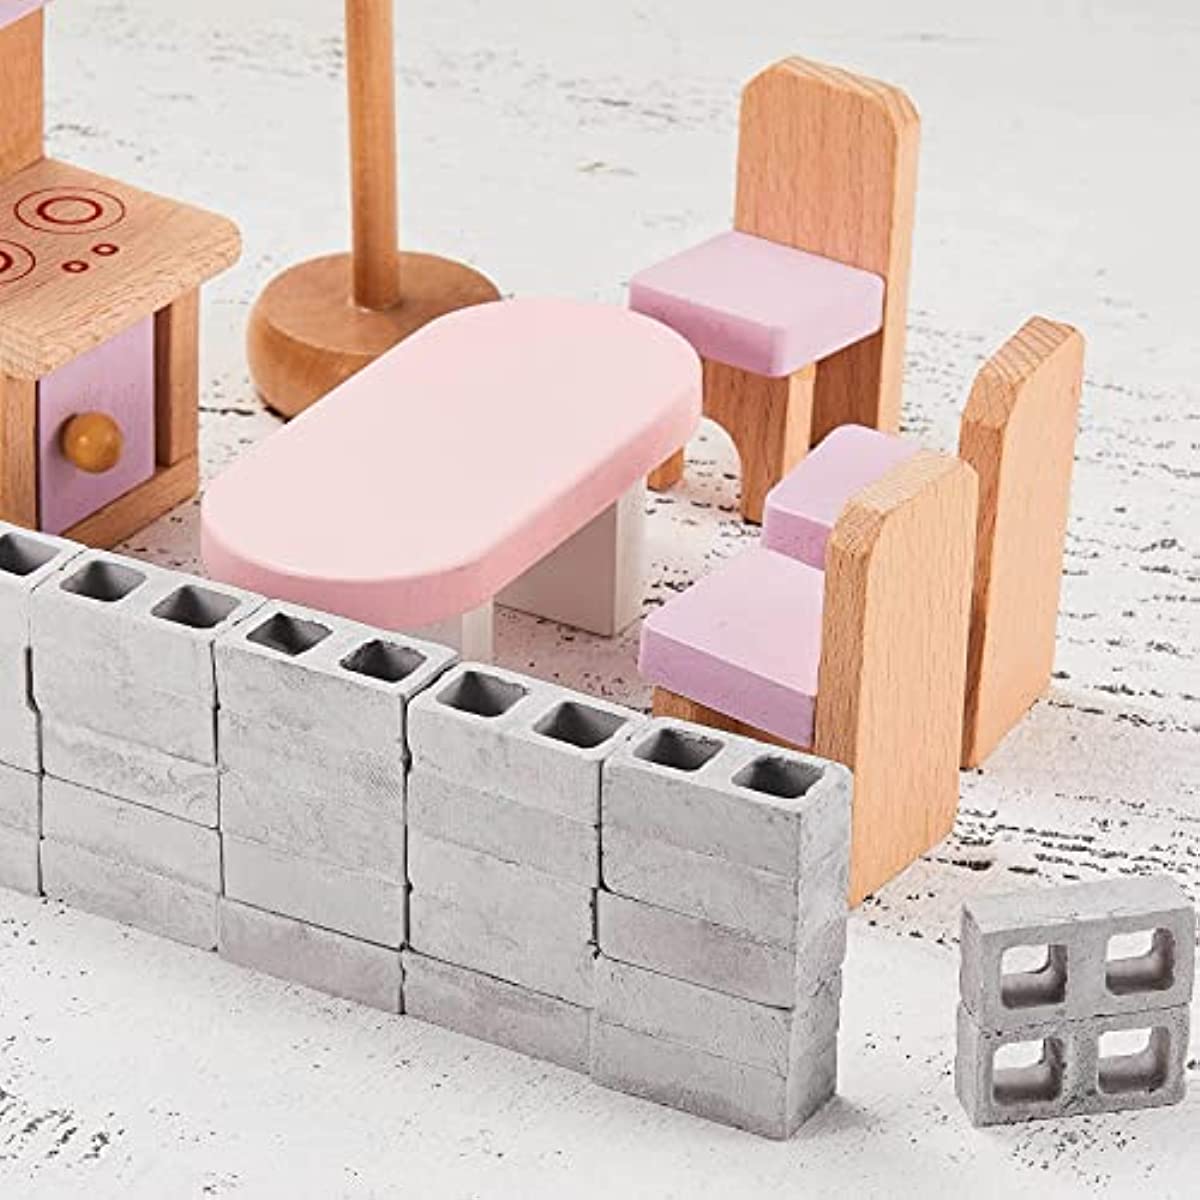 30PCS Diy Brick Building Set Miniature Bricks Tiny Bricks Kids Construction  Toys